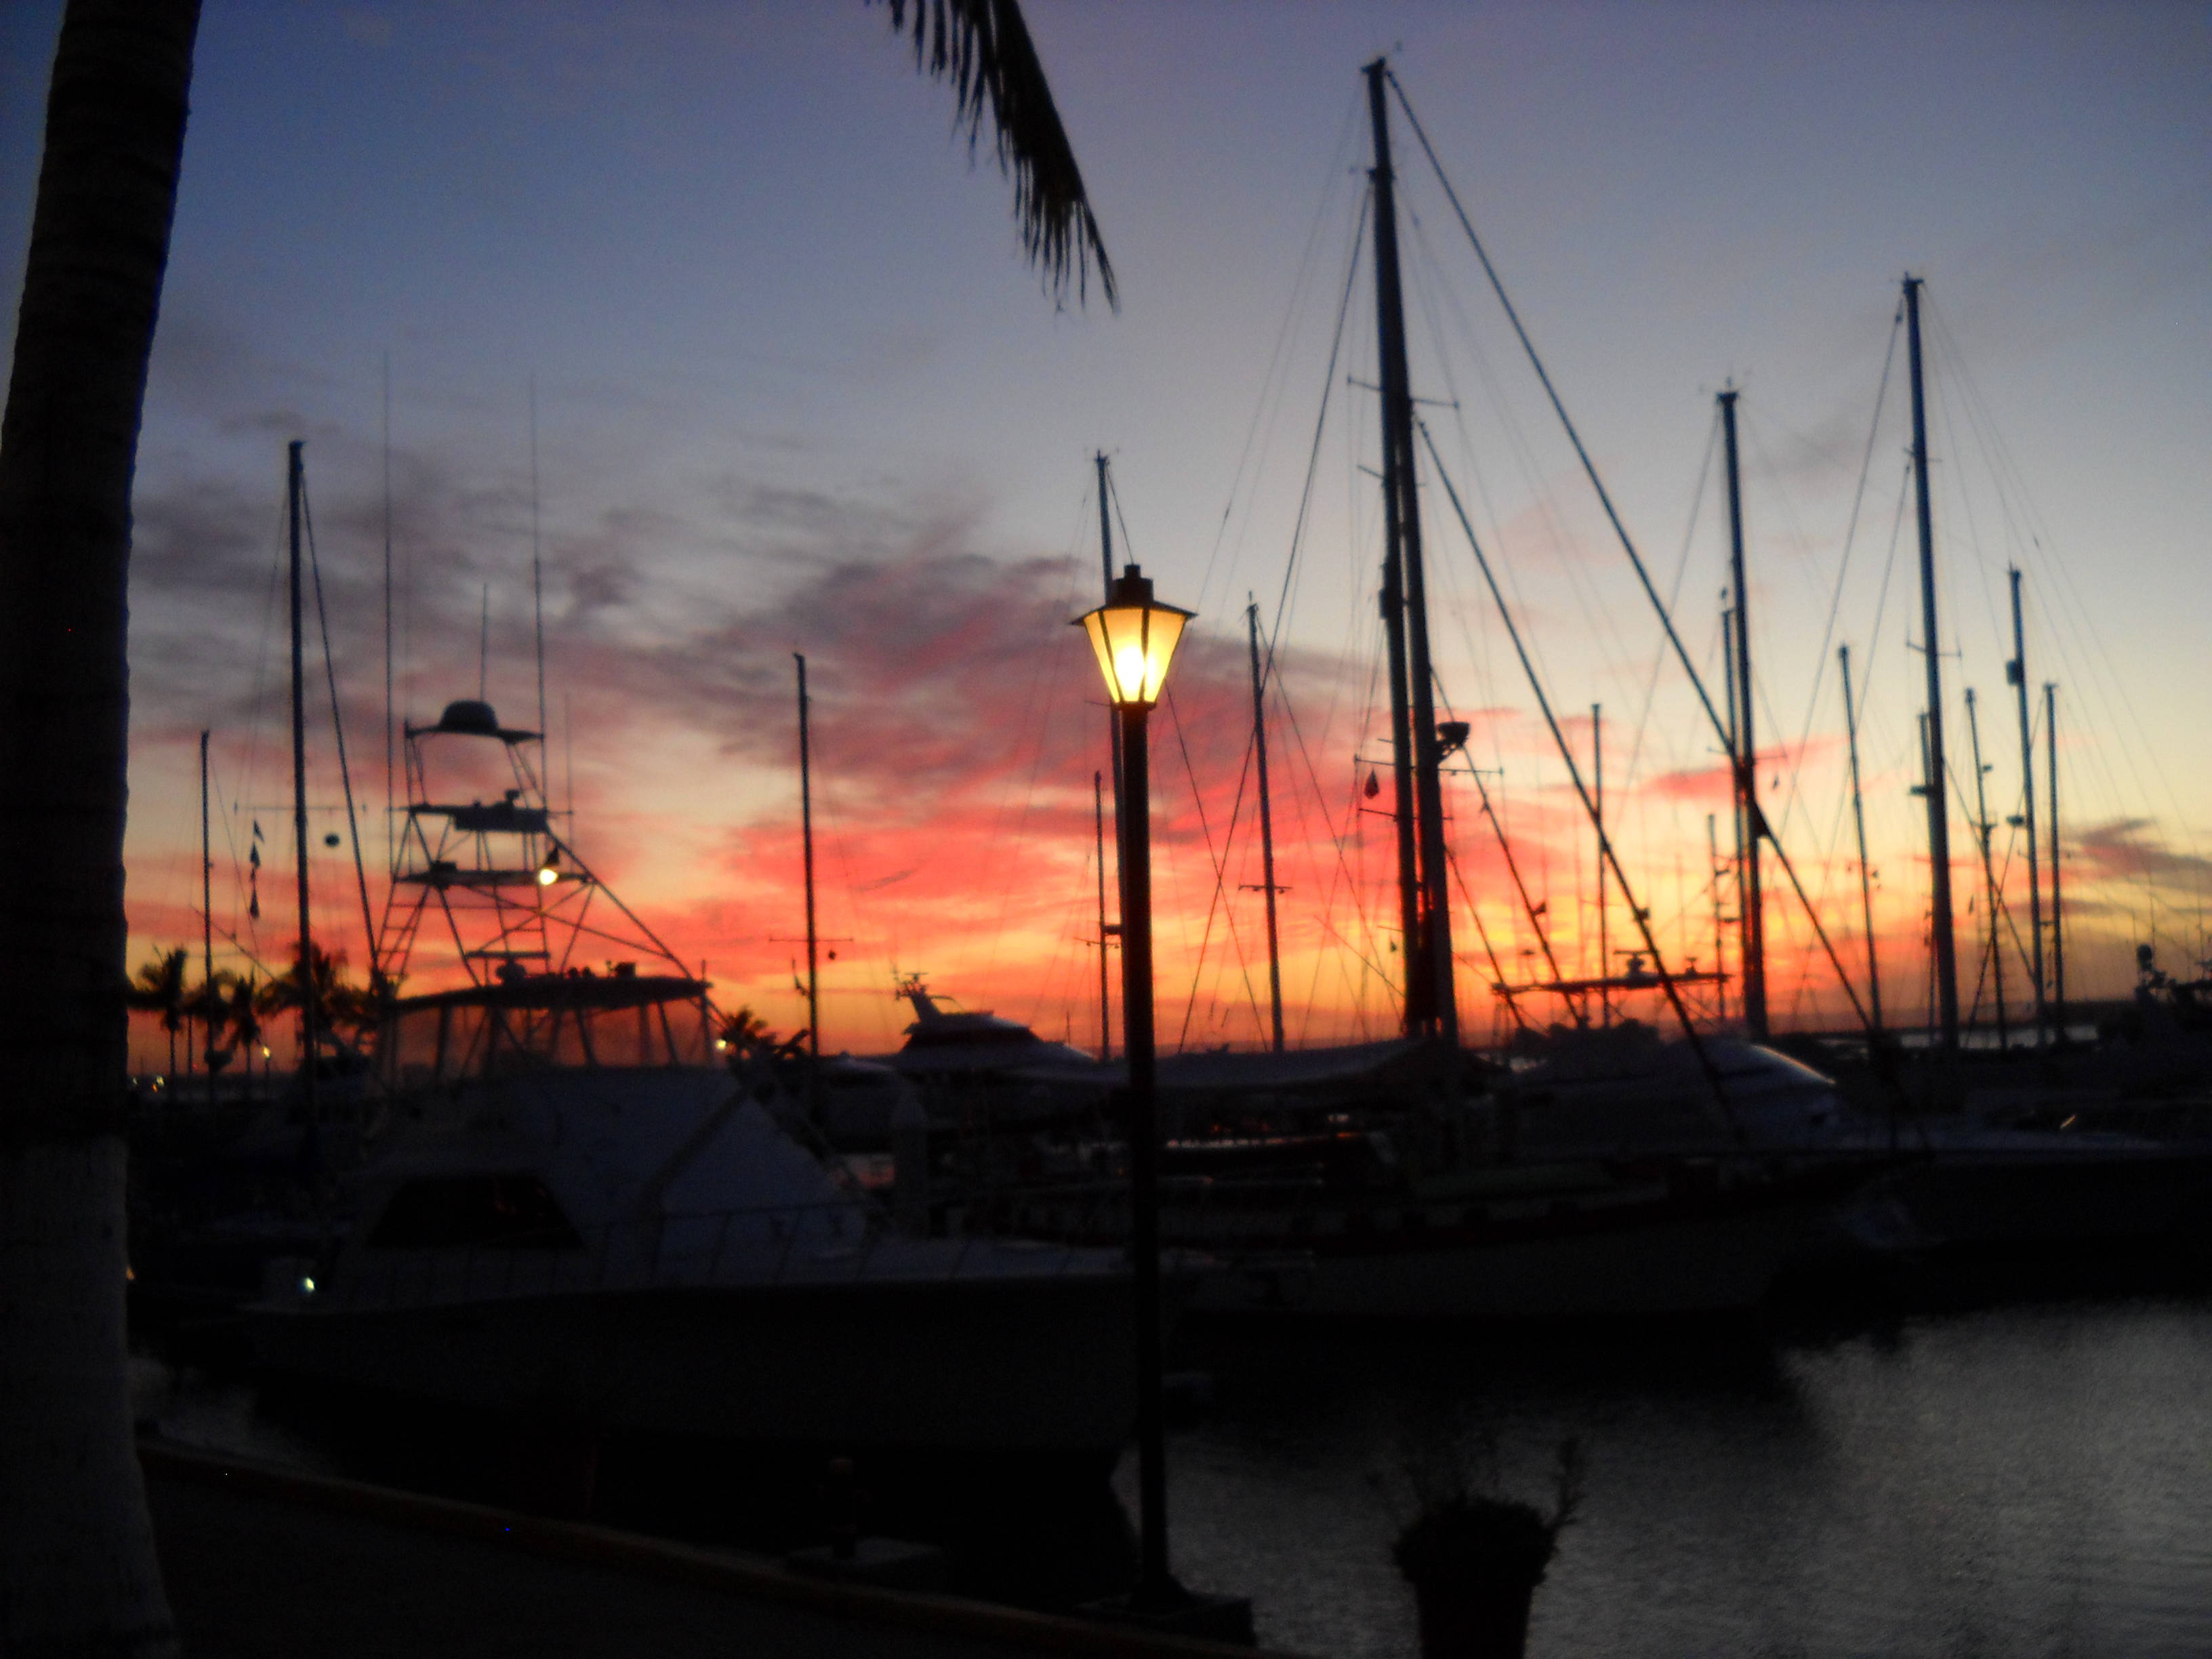 Marina De La Paz Marina sunset — Treasure Island Yacht Club